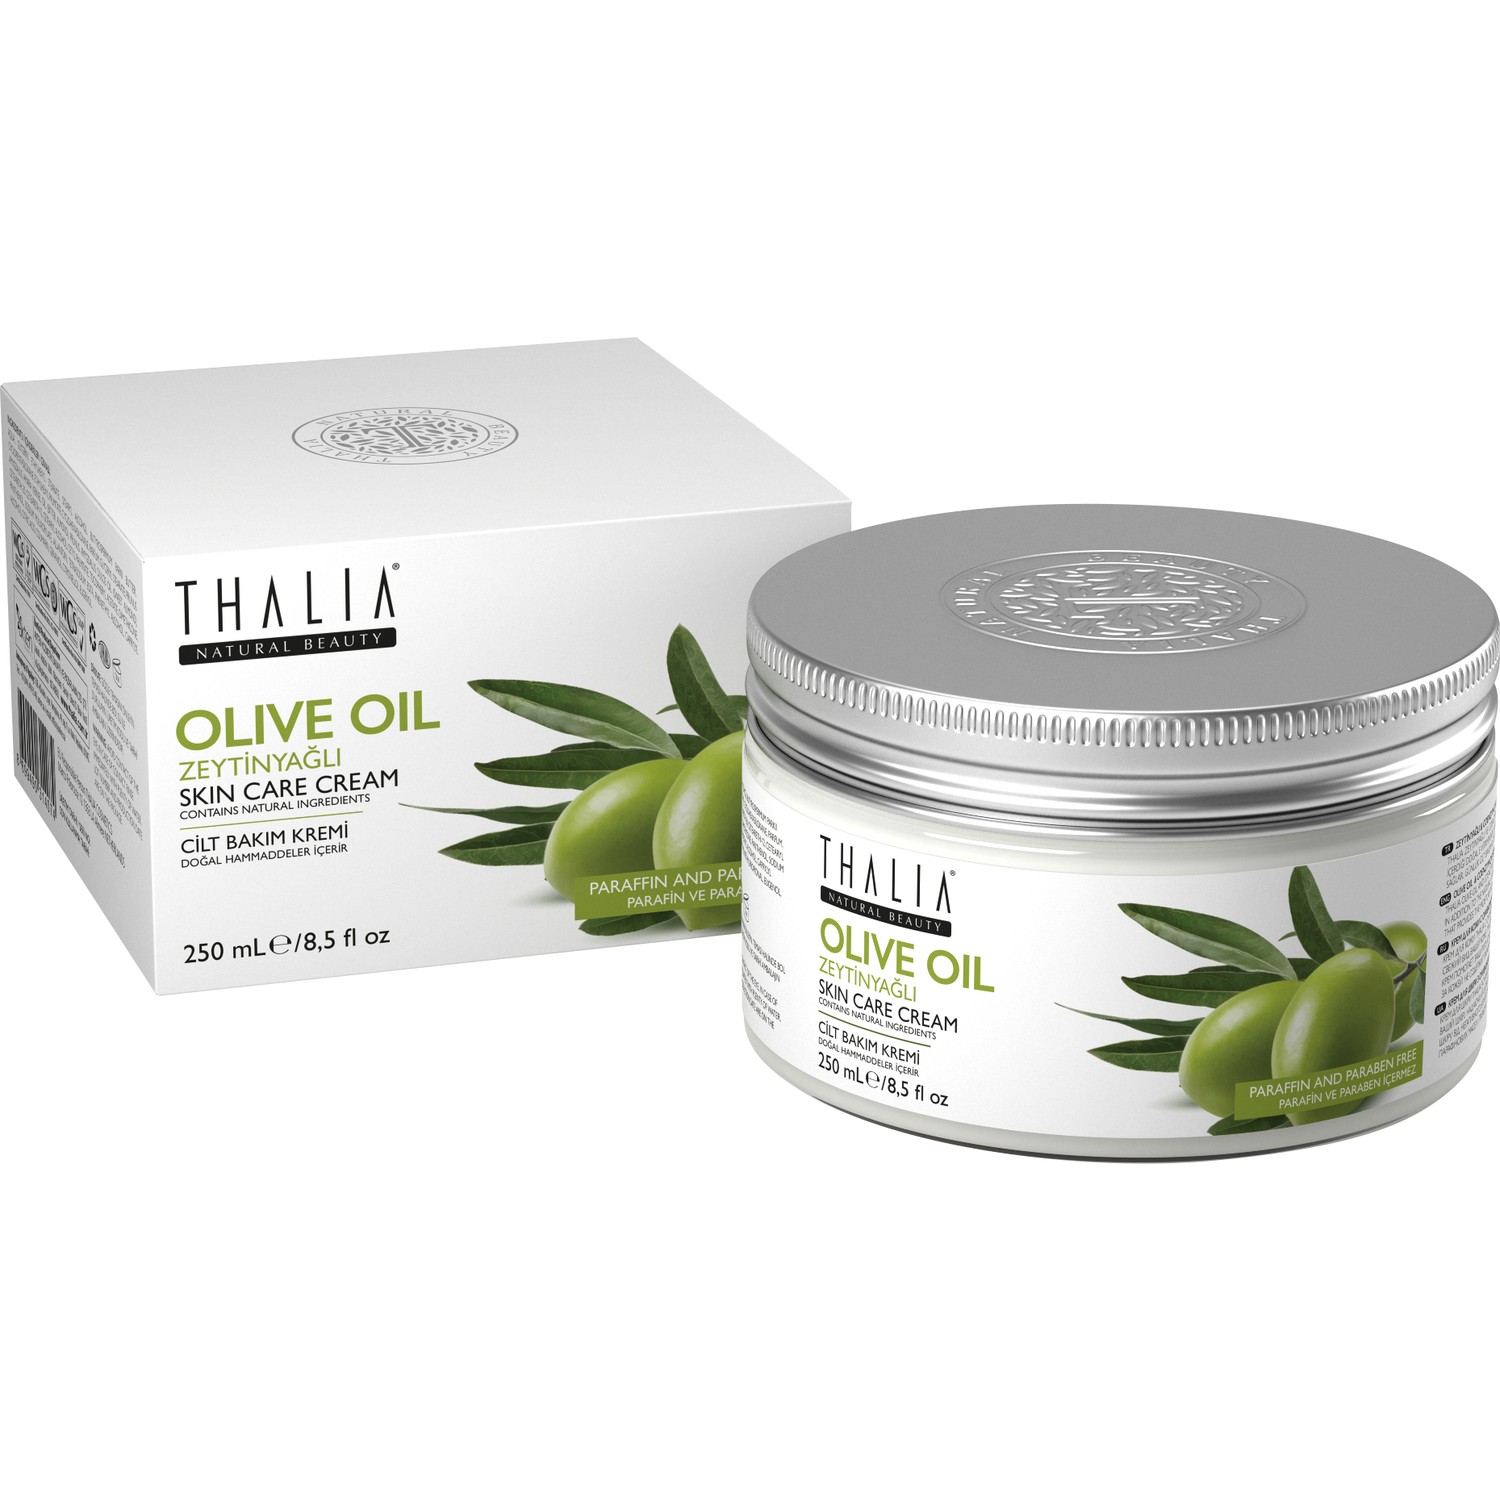 Увлажняющий крем для ухода за кожей Thalia с оливковым маслом, 250 мл dalan d olive шампунь защита цвета с оливковым маслом 400 мл